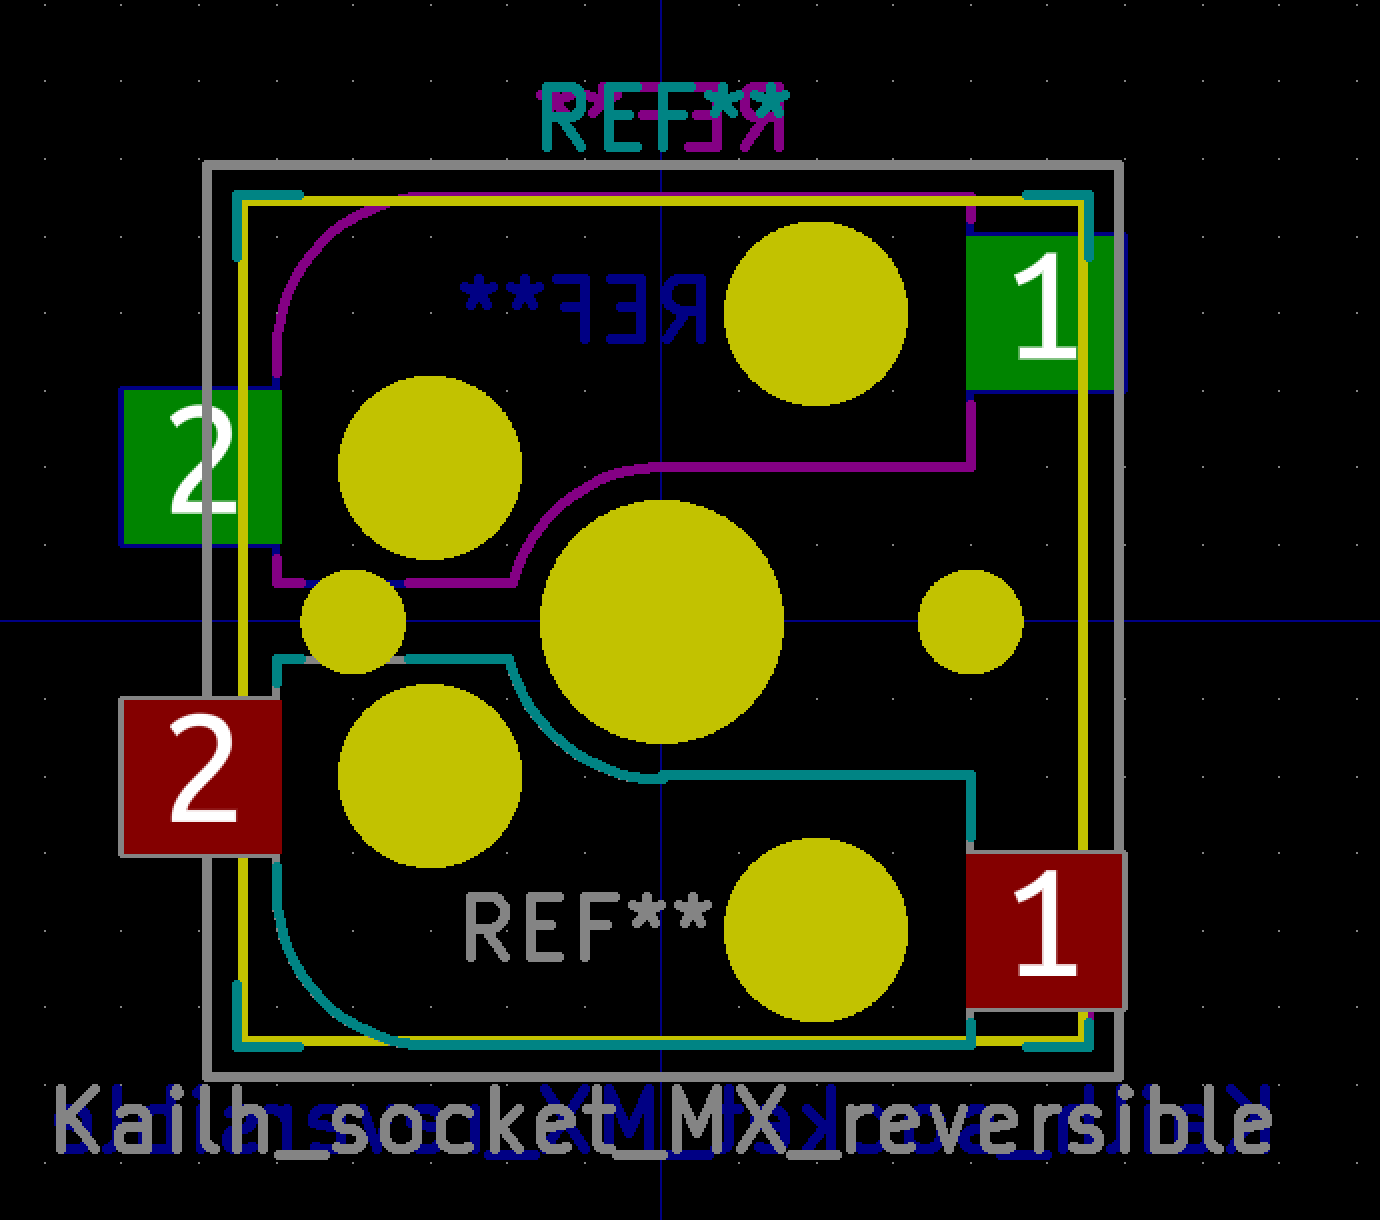 Kailh_socket_MX_reversible